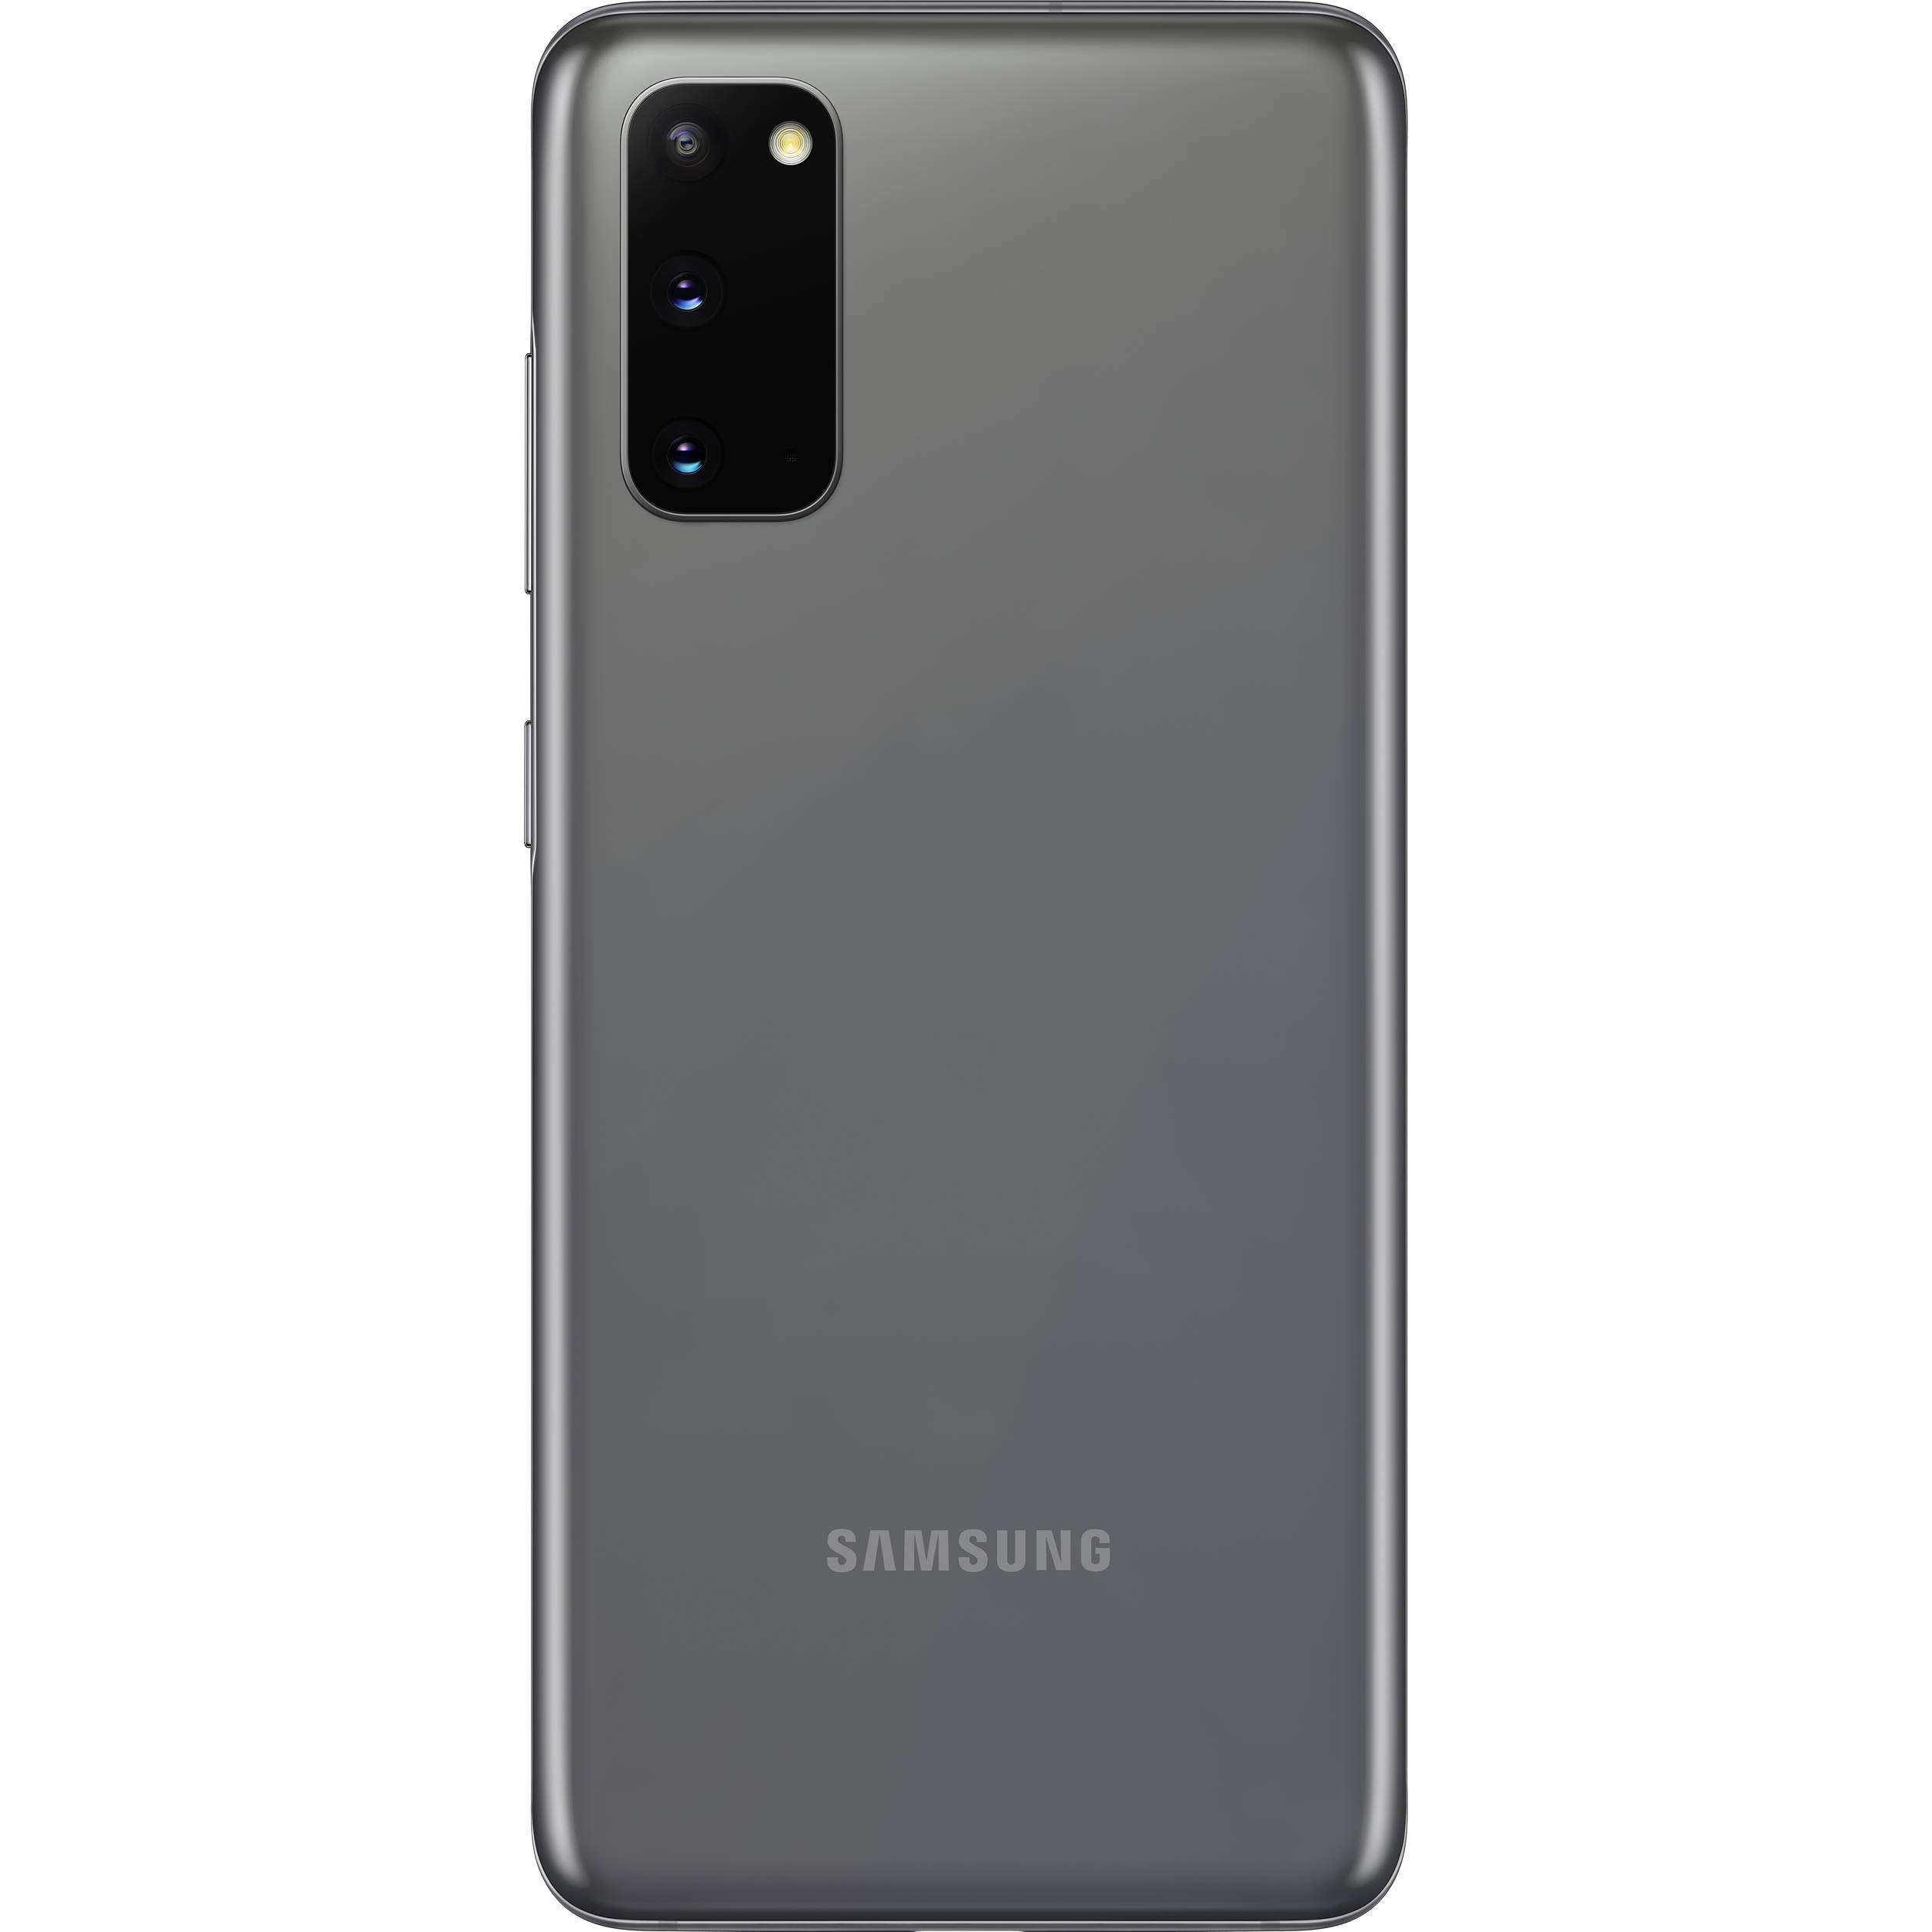 Samsung Galaxy S20 5g Sm G981u 128gb Smartphone Sm G981uzaaxaa